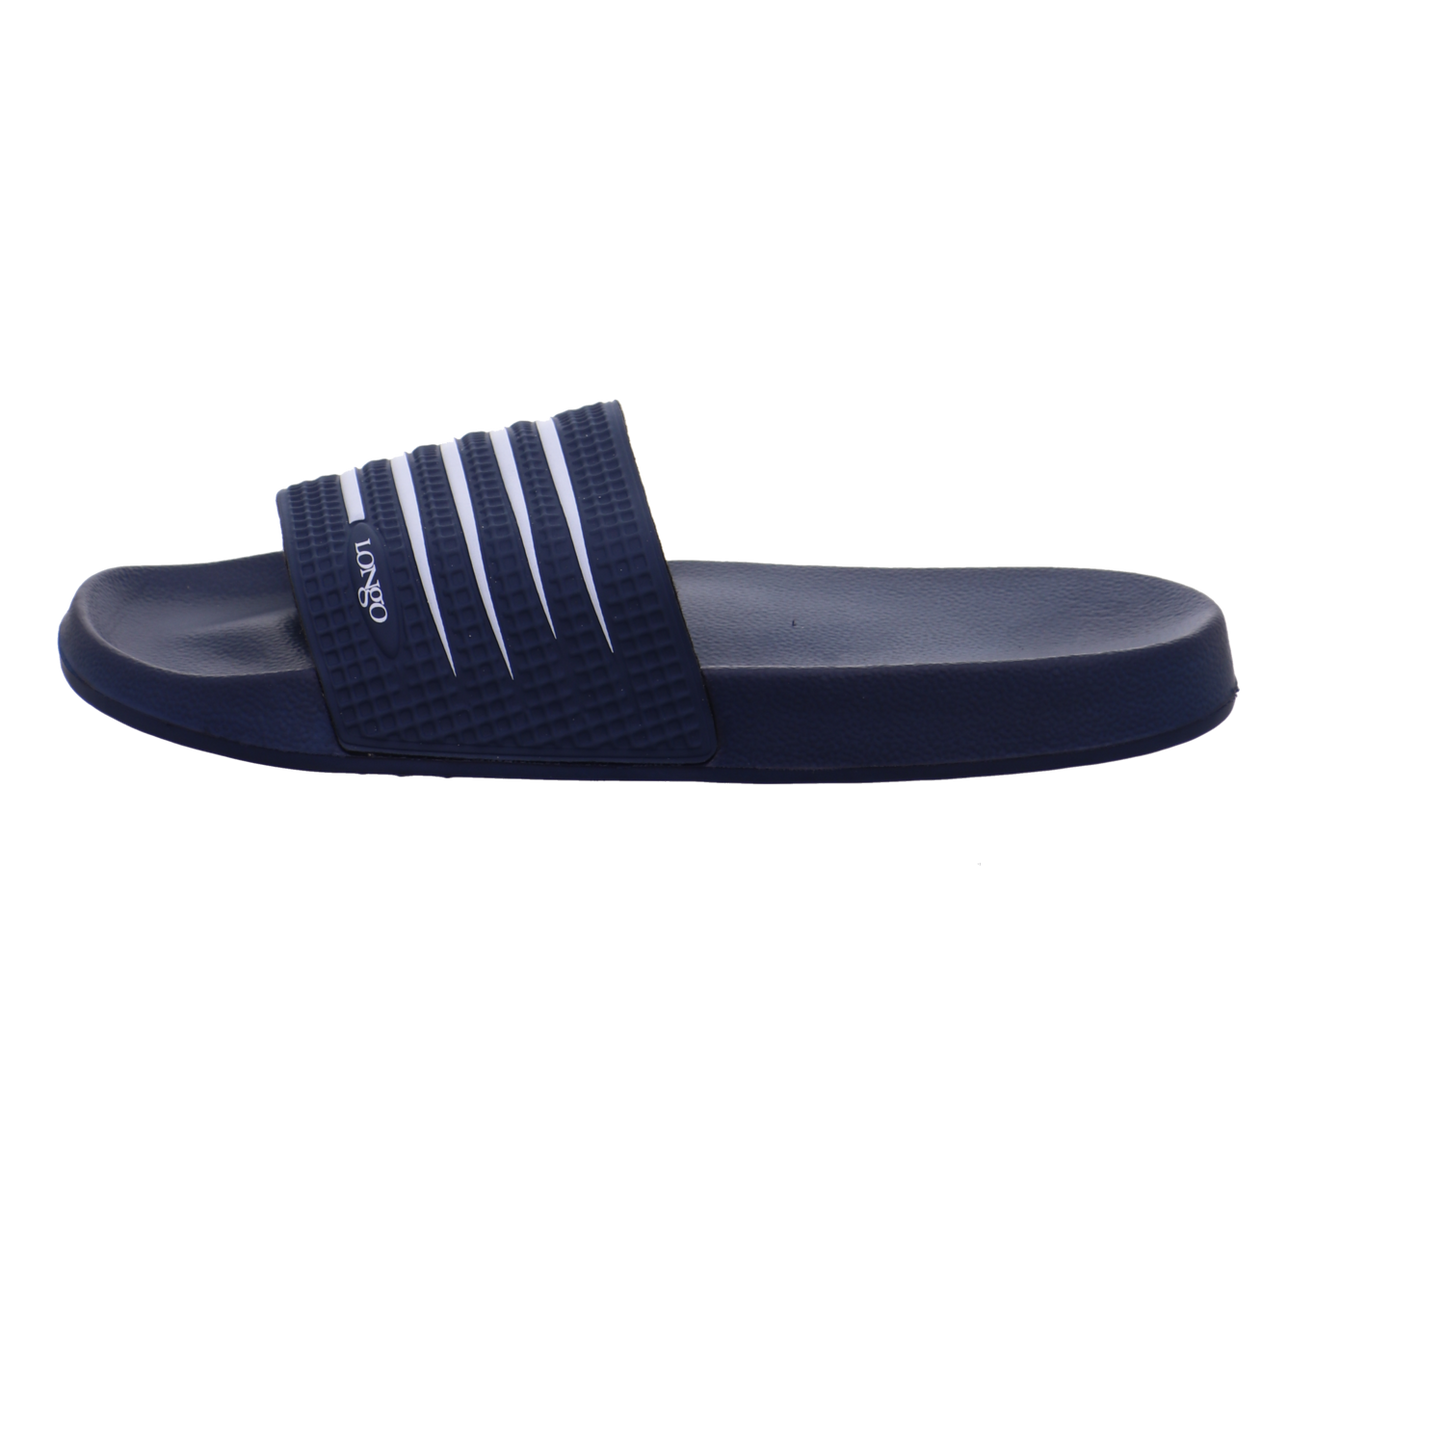 Sprint Schuhe  dunkel-blau Bild1